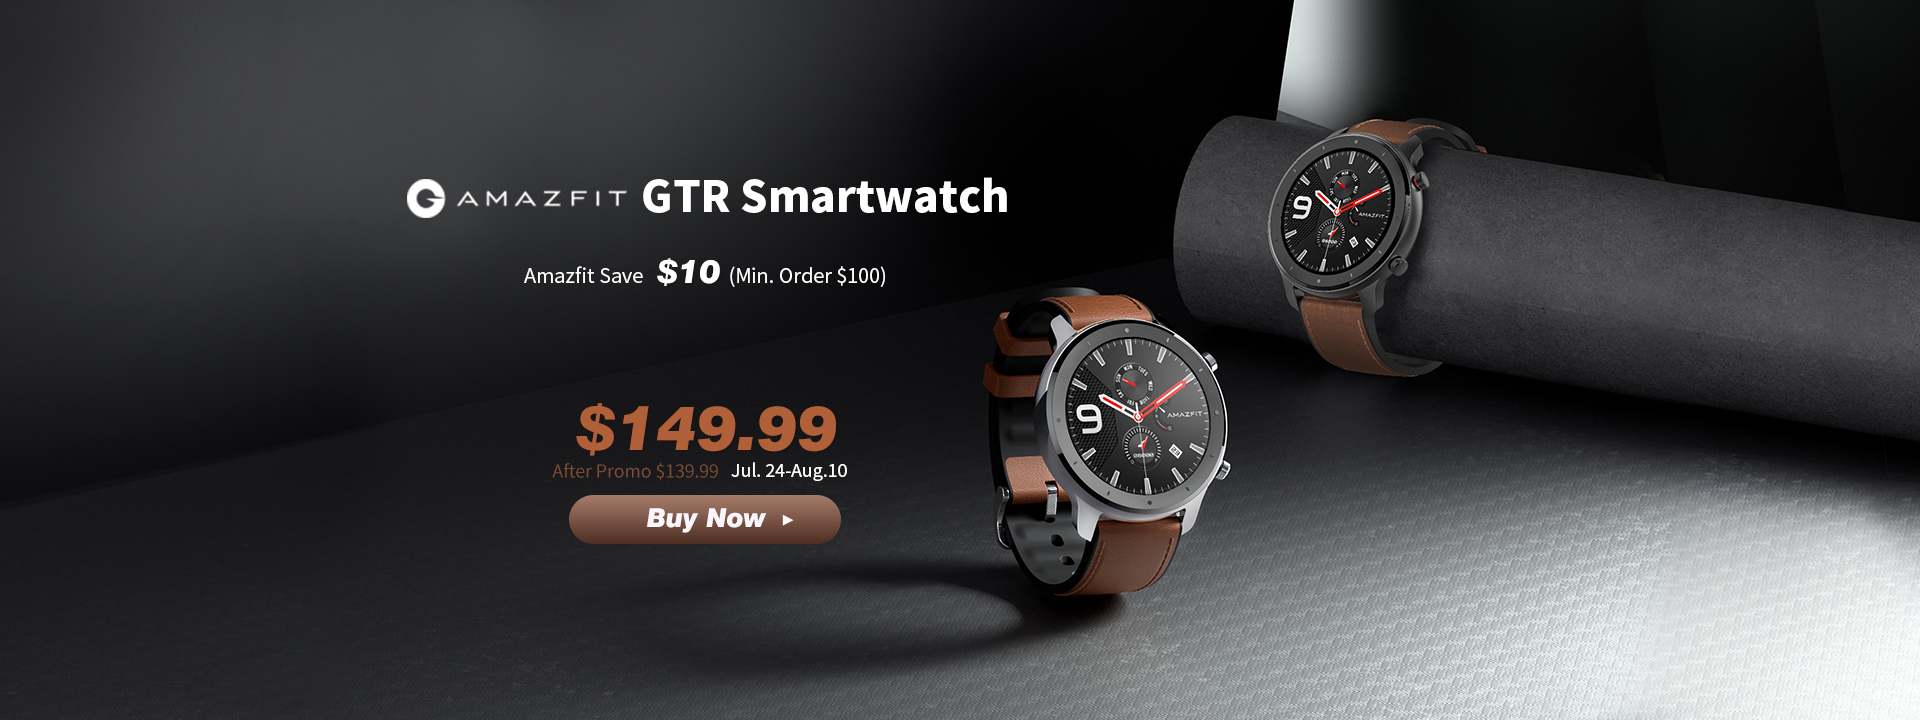 Amazfit GTR smartwatch for Just $139.99 2